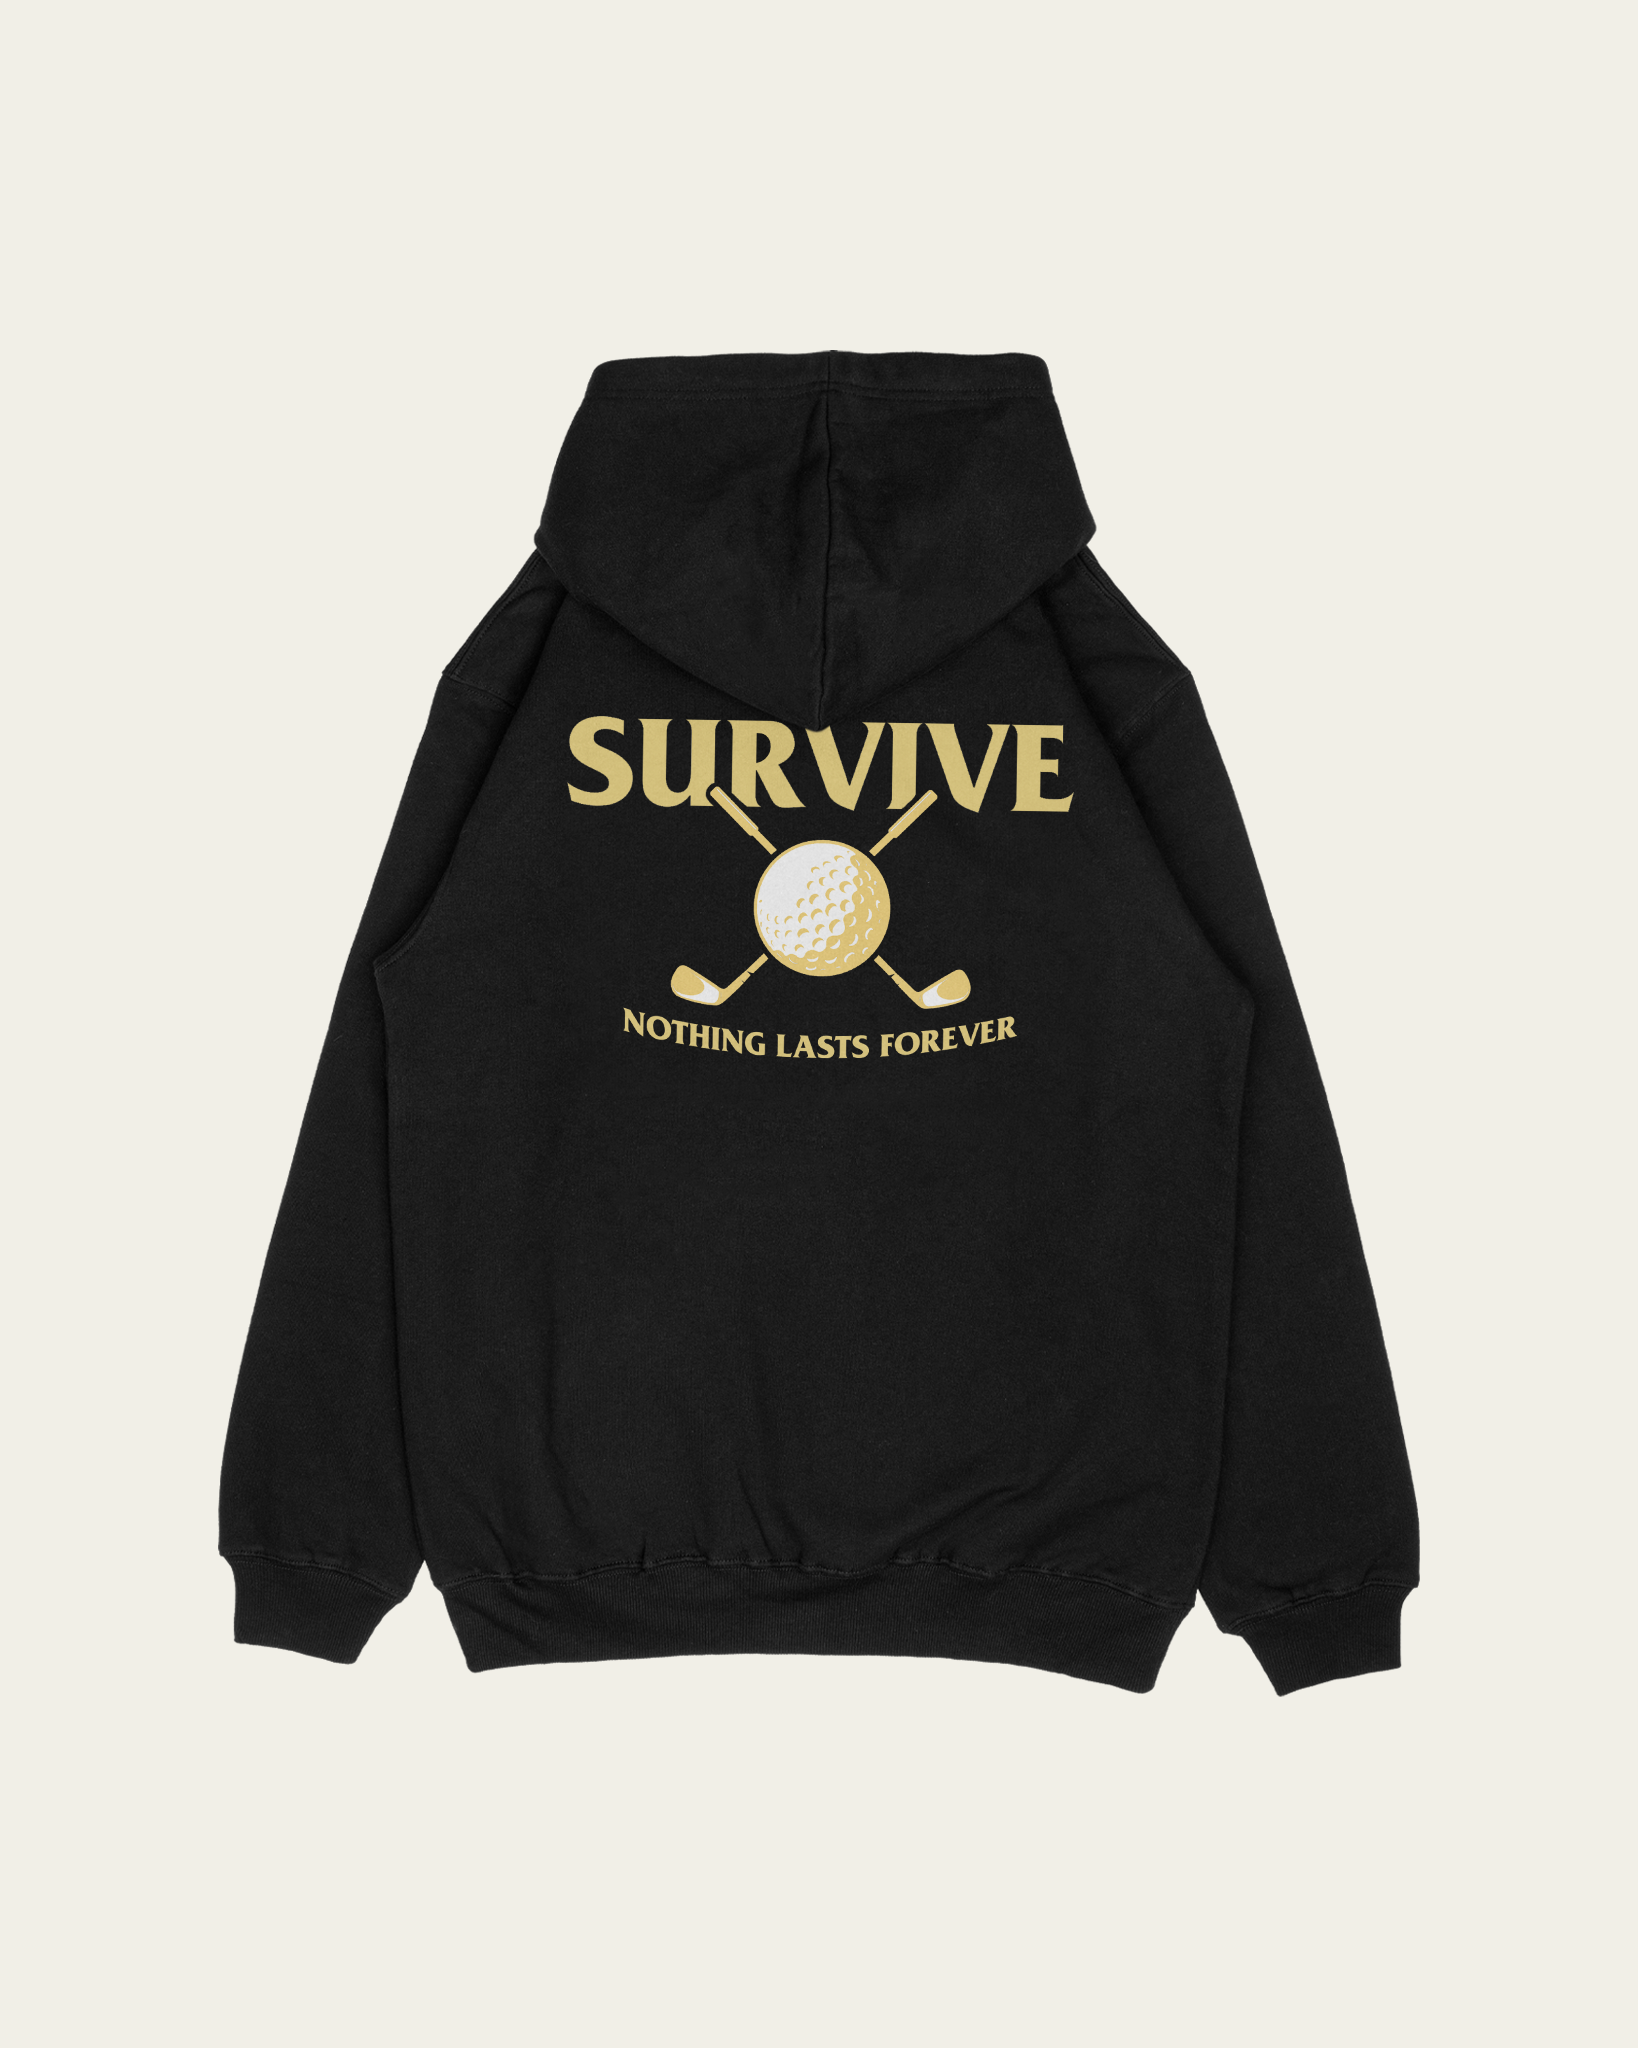 WEAR IT AND SURVIVE – wearitandsurvive